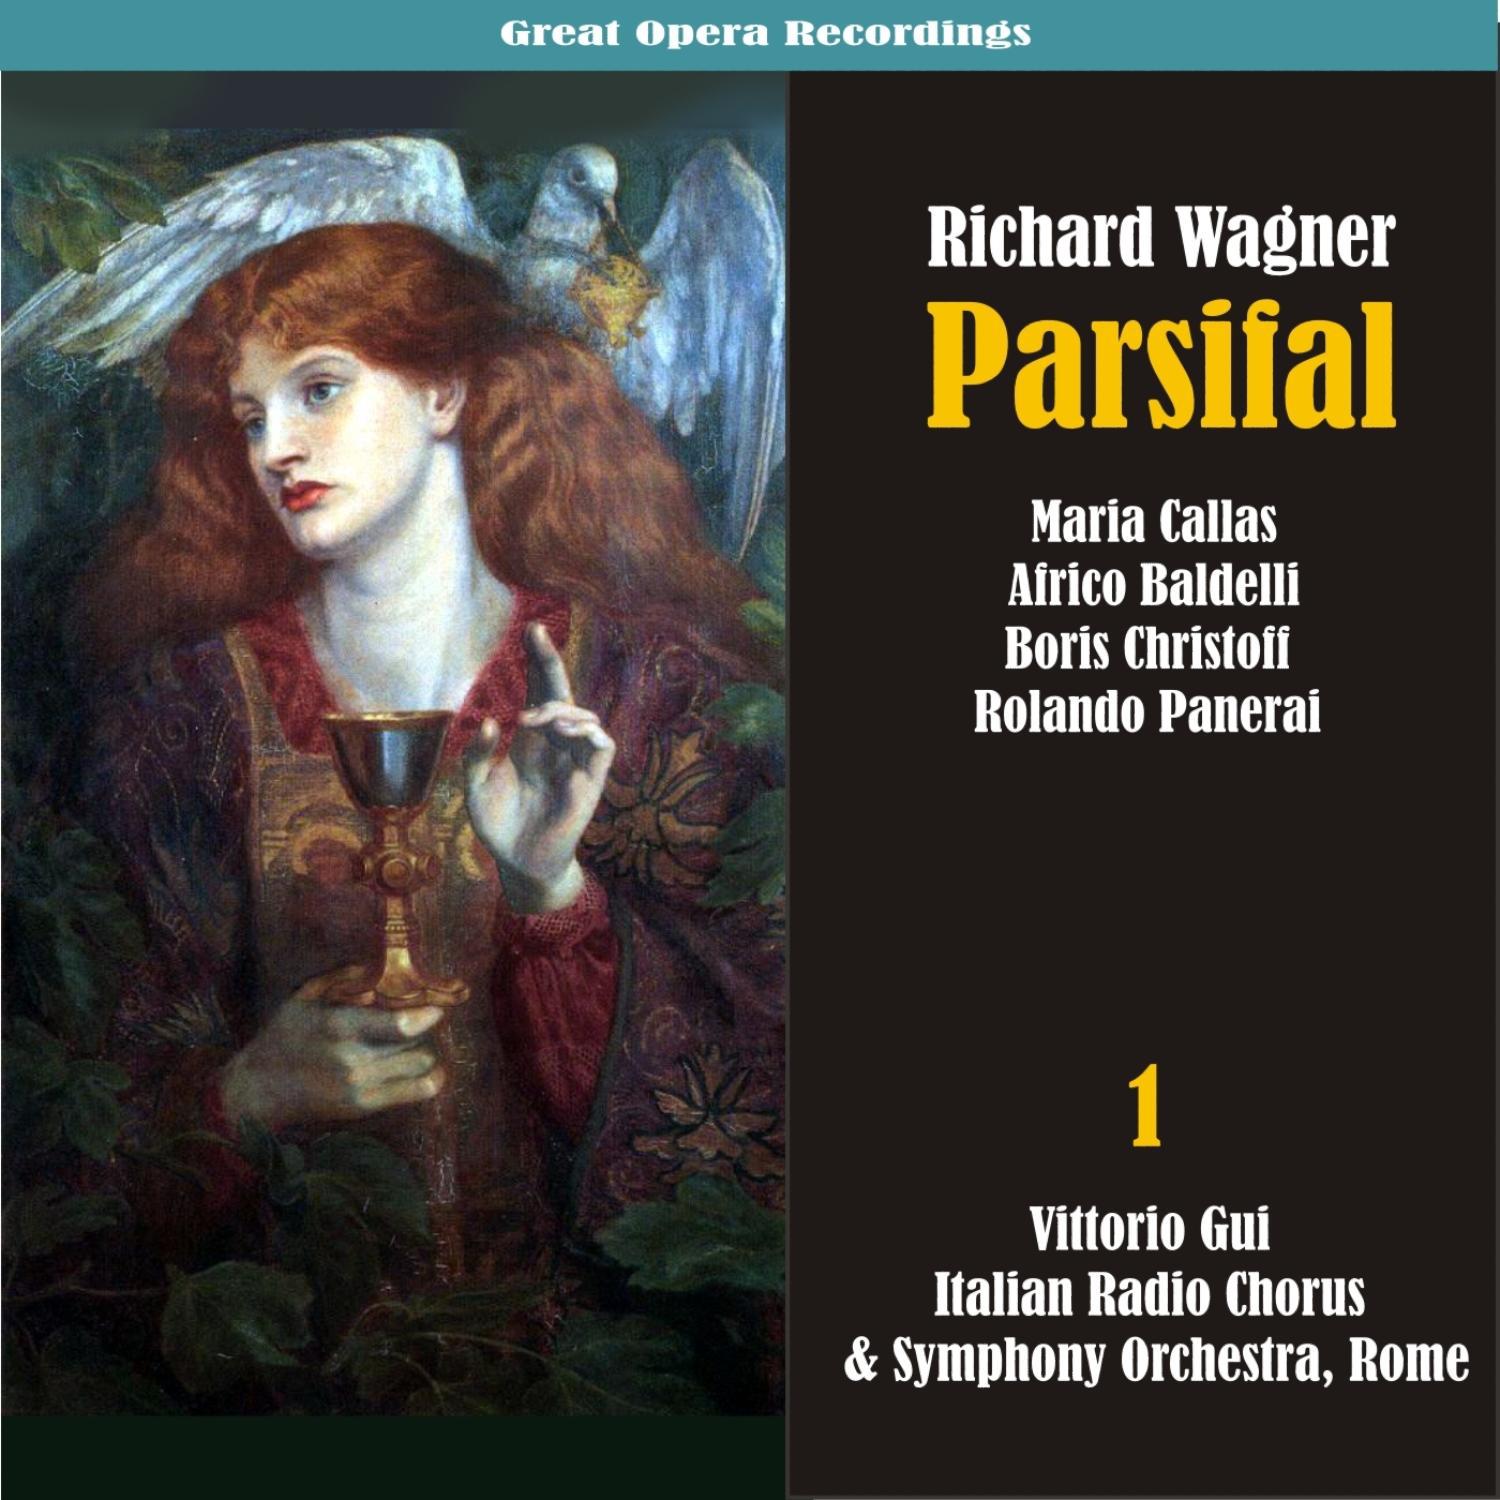 Italian Radio Chorus Rome - Parsifal: Act I, 